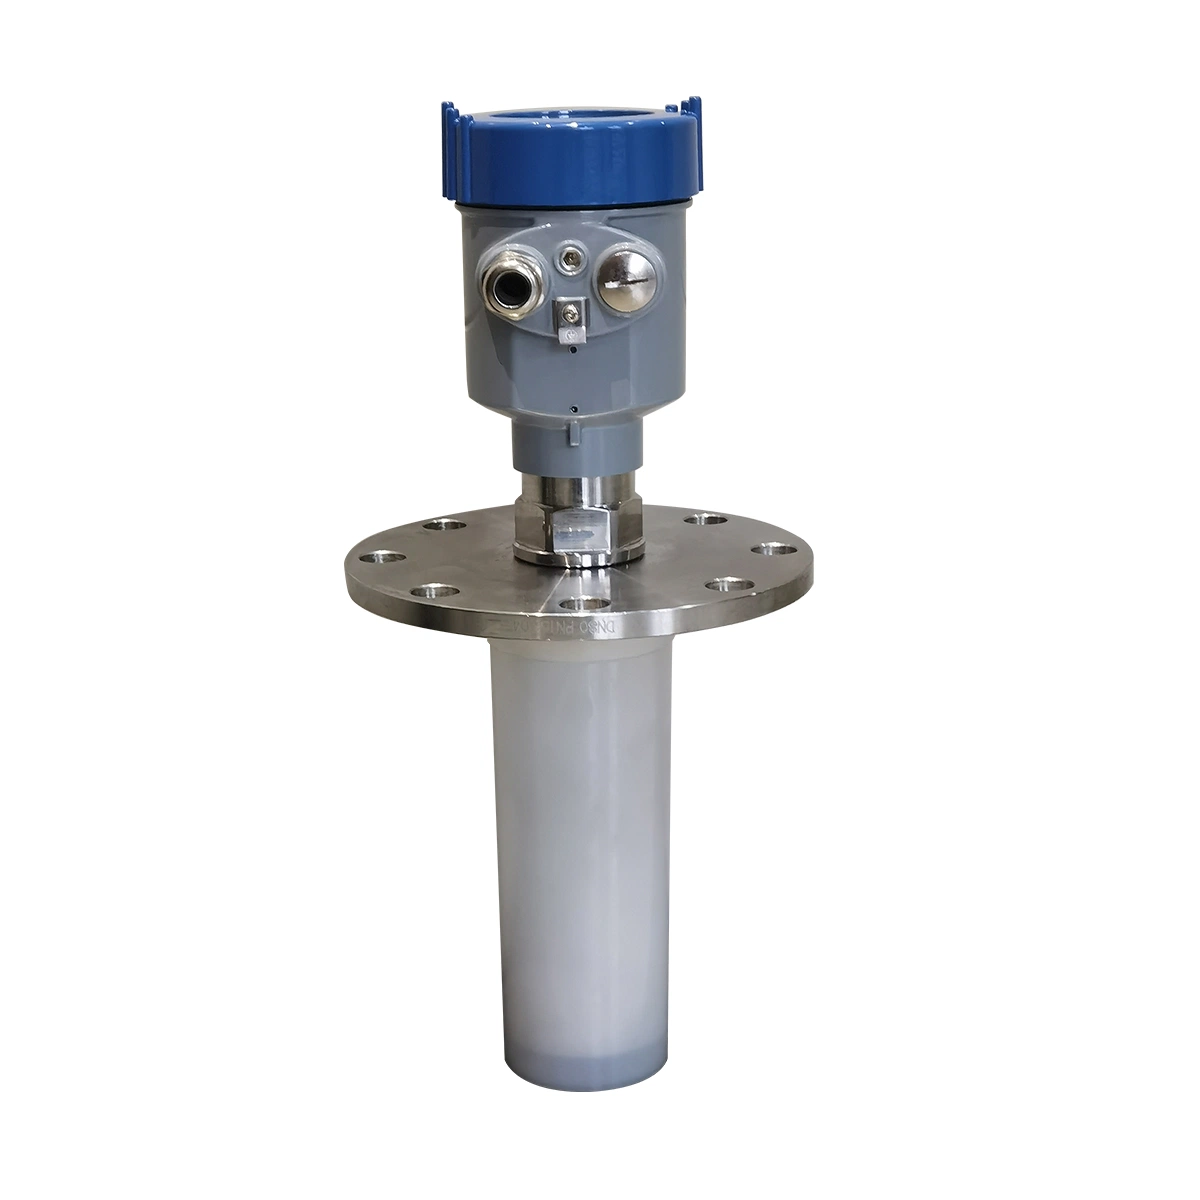 Stainless Steel Radar Level Meter for Oil/Fuel/Water Industrial Measurement